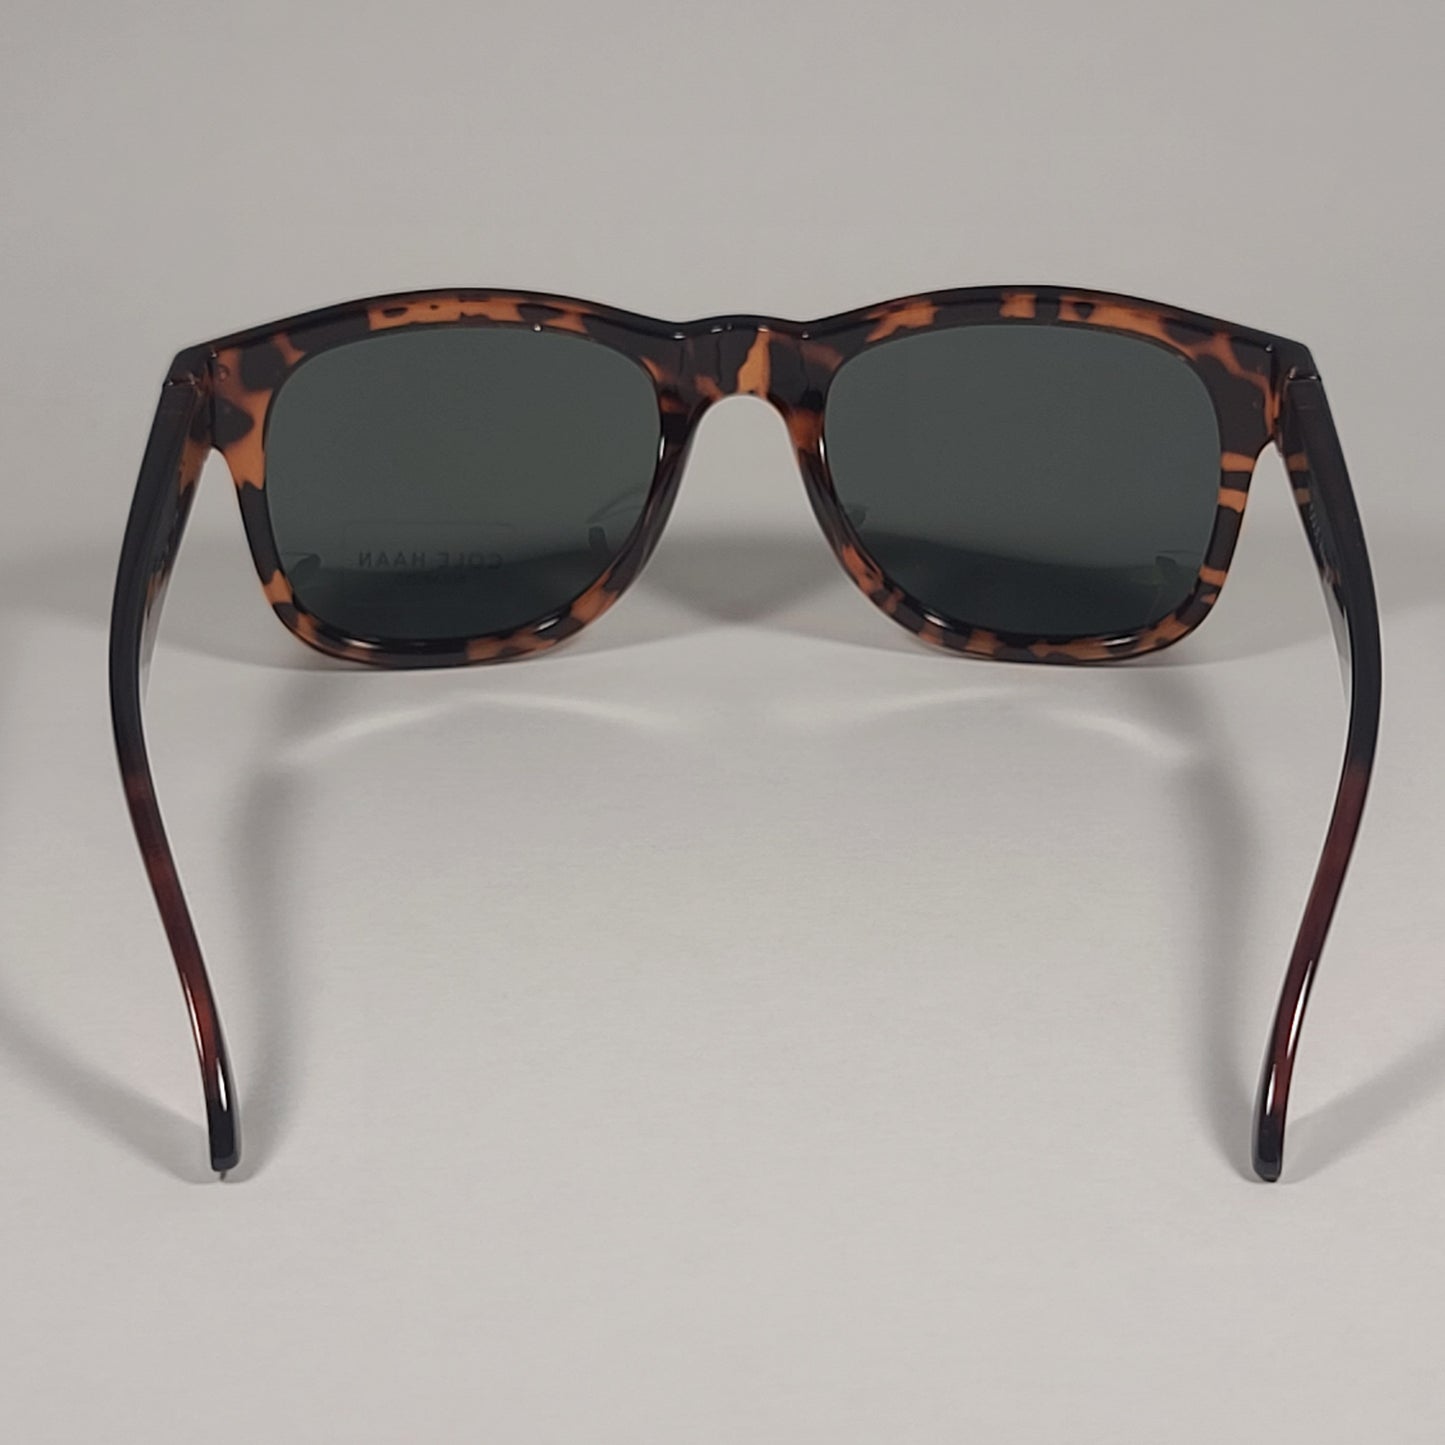 Cole Haan CH8000 215 TORTOISE Polarized Square Sunglasses Brown Tortoise Frame Green Lens - Sunglasses